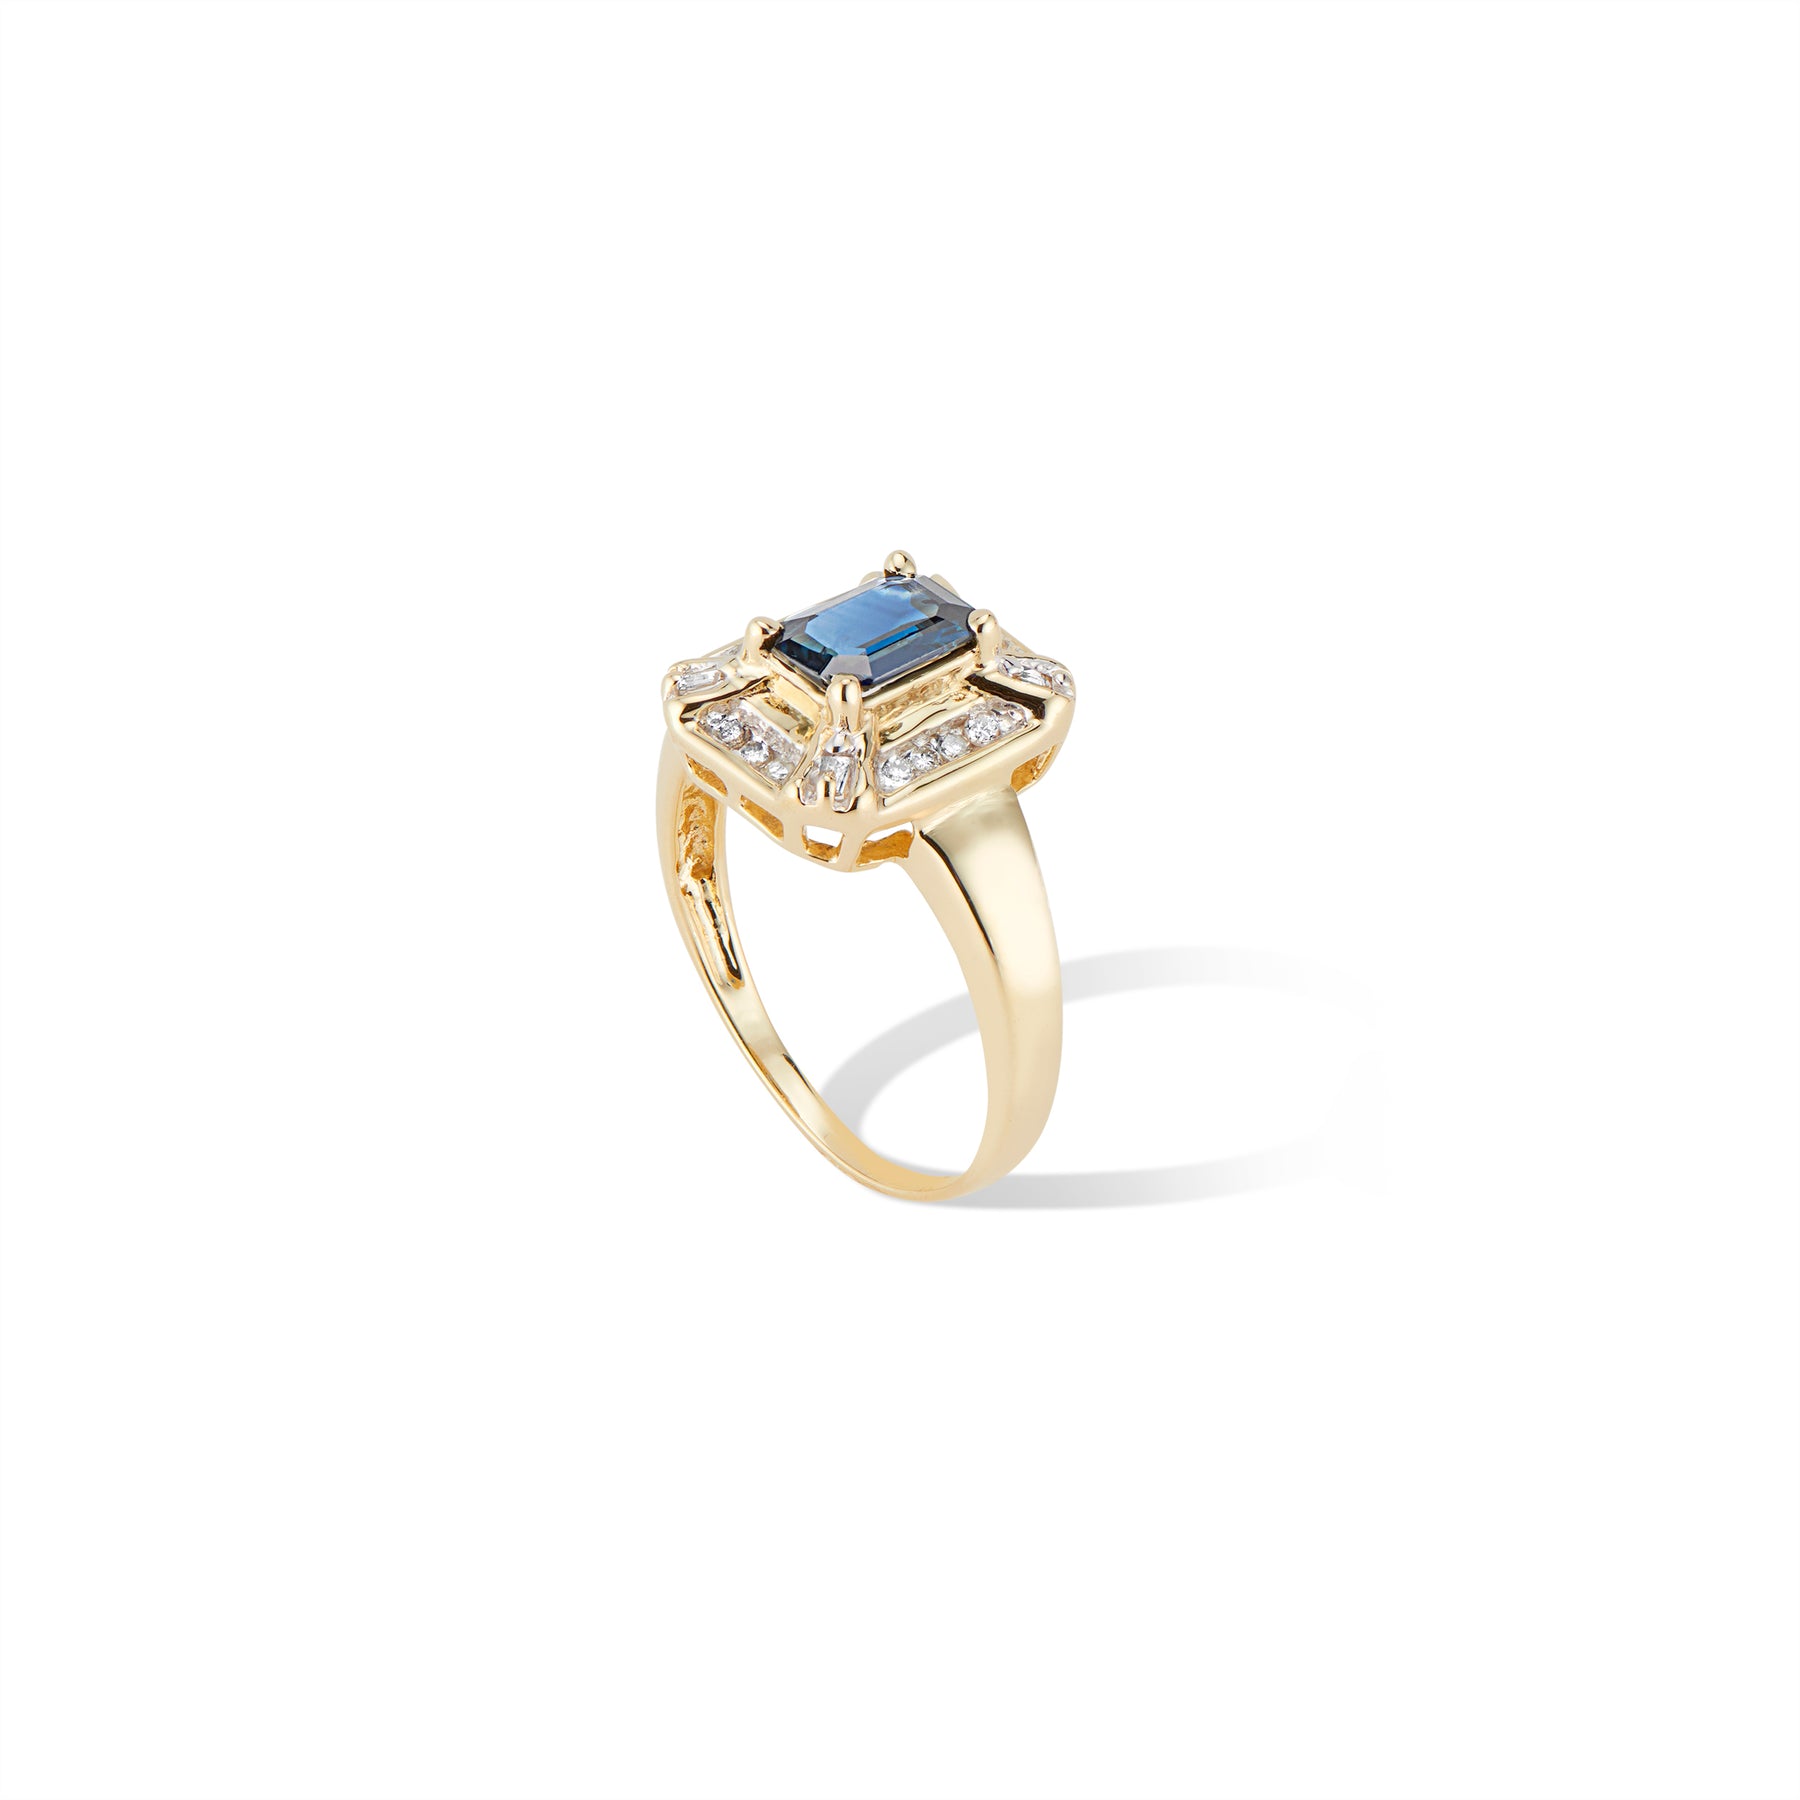 Vintage 14K Yellow Gold Diamond and Emerald Cut sapphire Dress ring - Side Profile